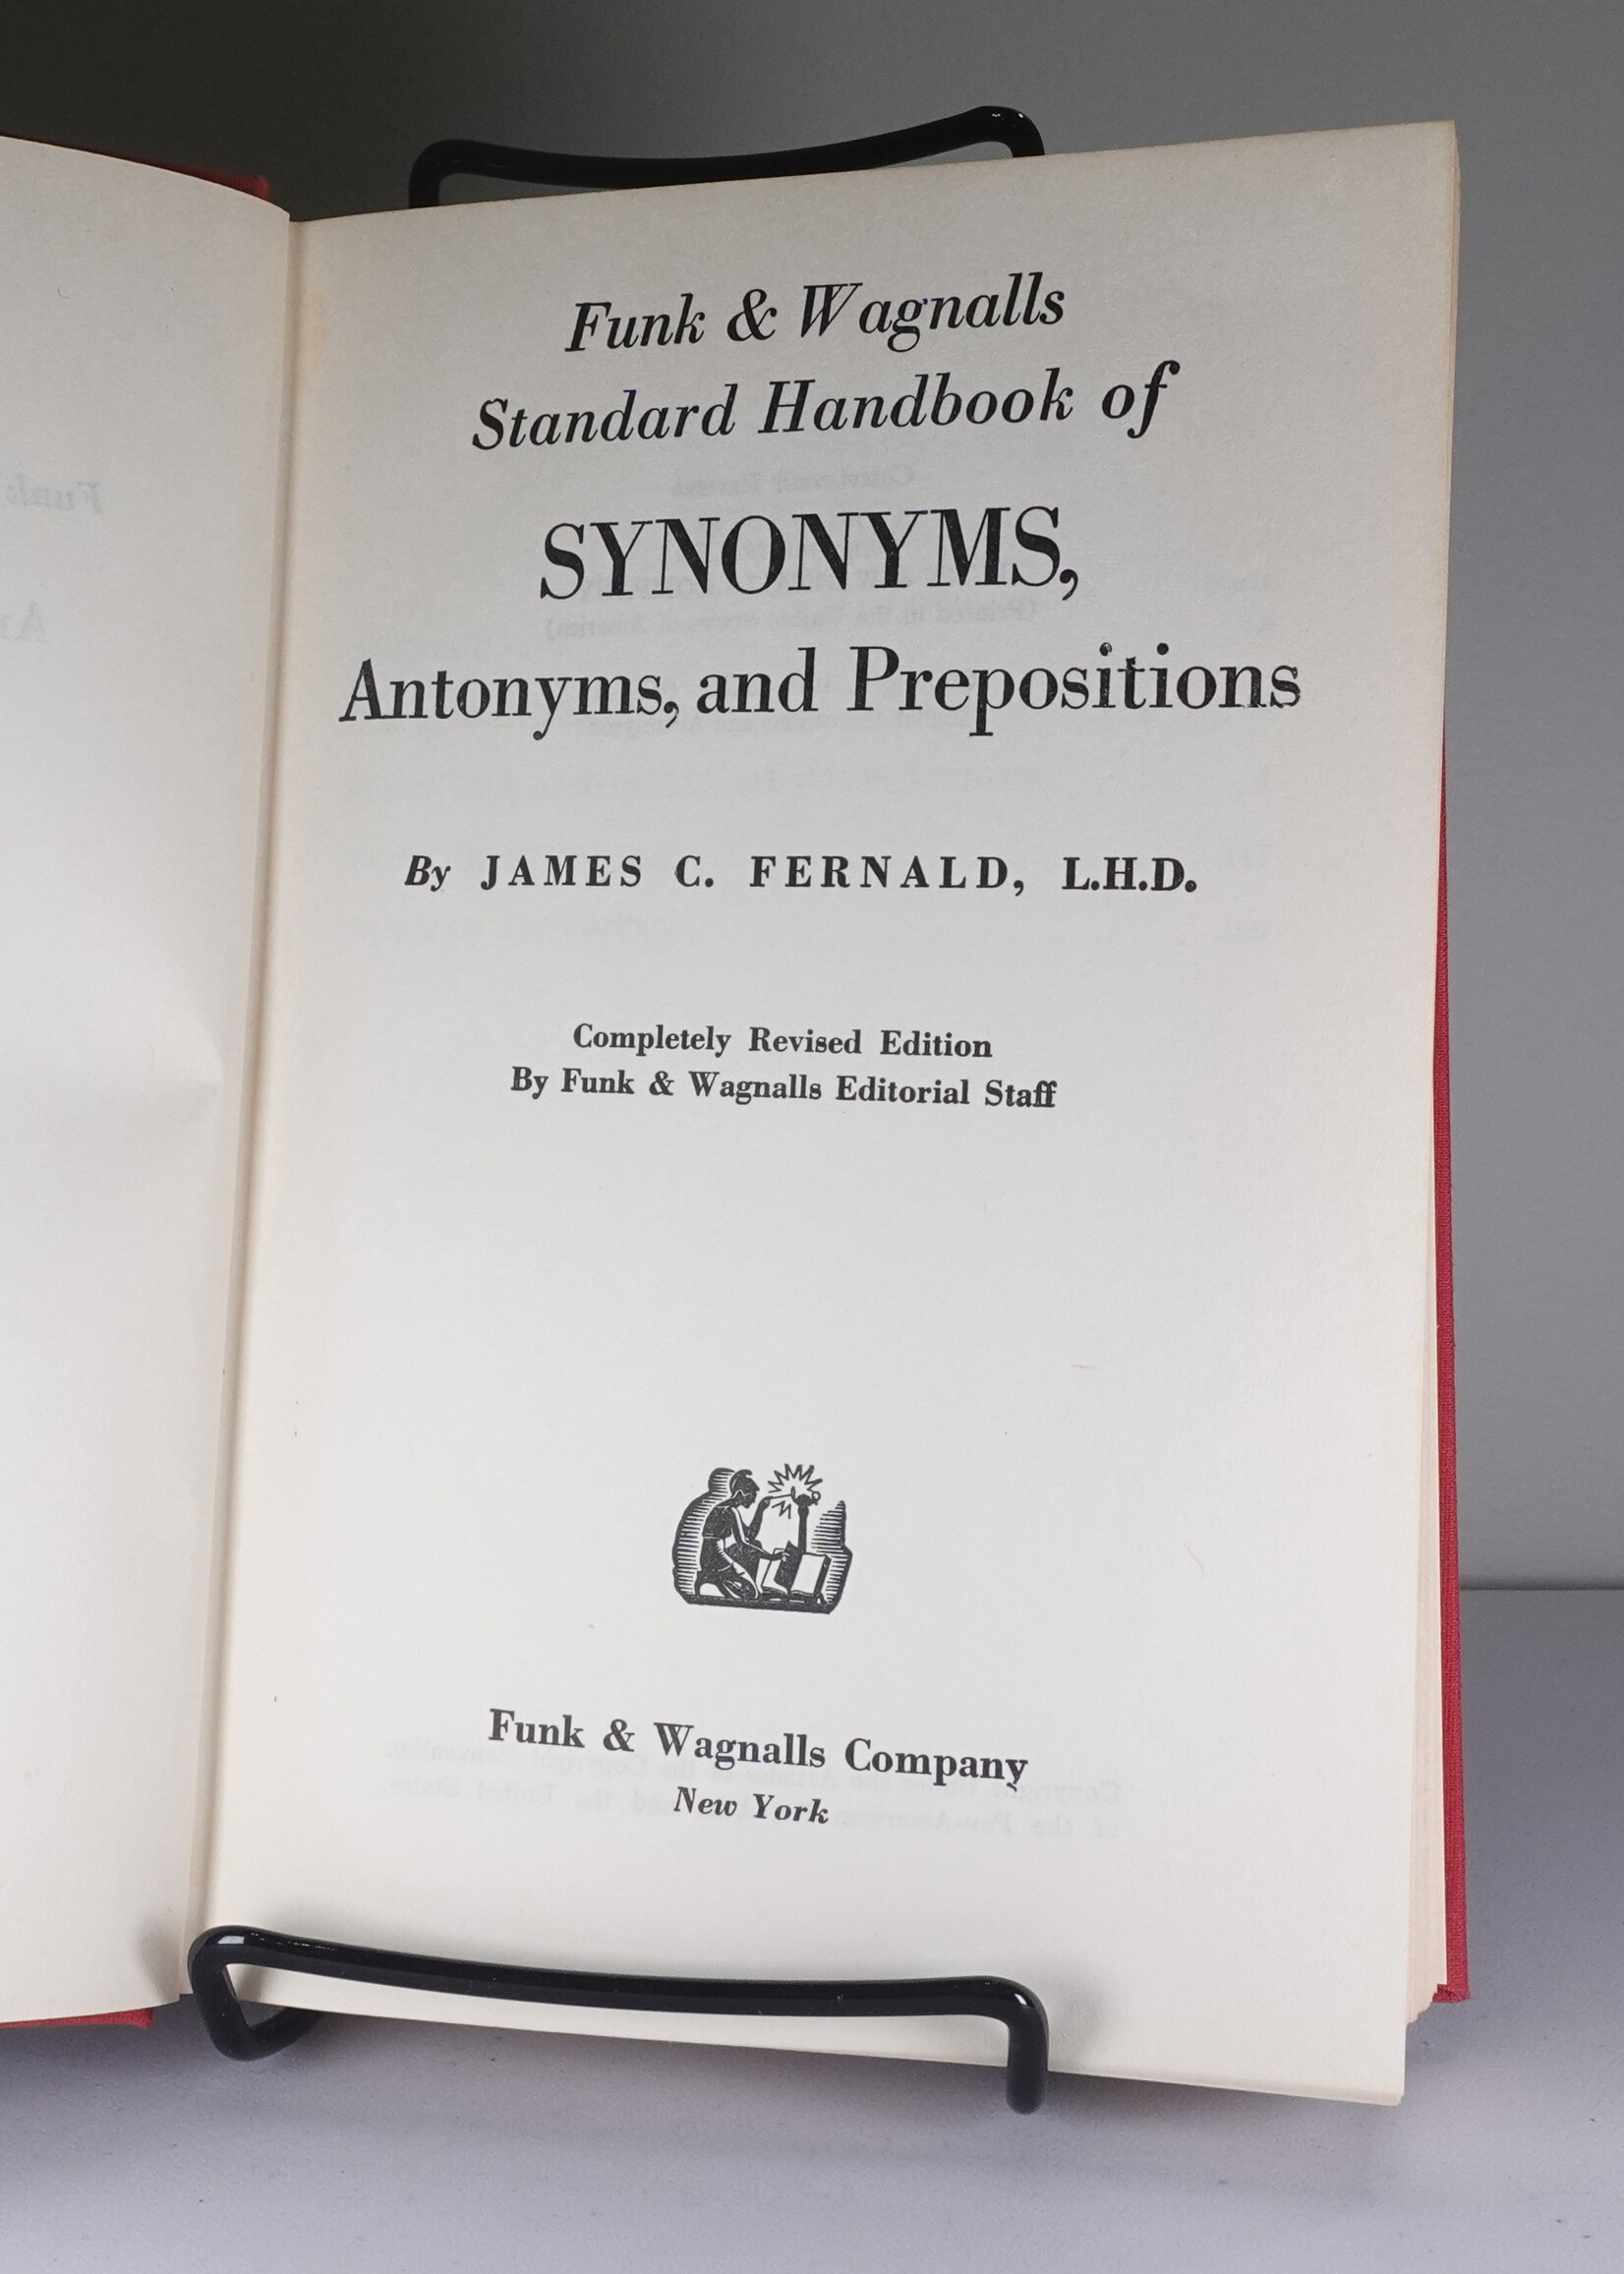 Funk & Wagnalls Standard Handbook of synonyms, Antonyms, and Prepostitions